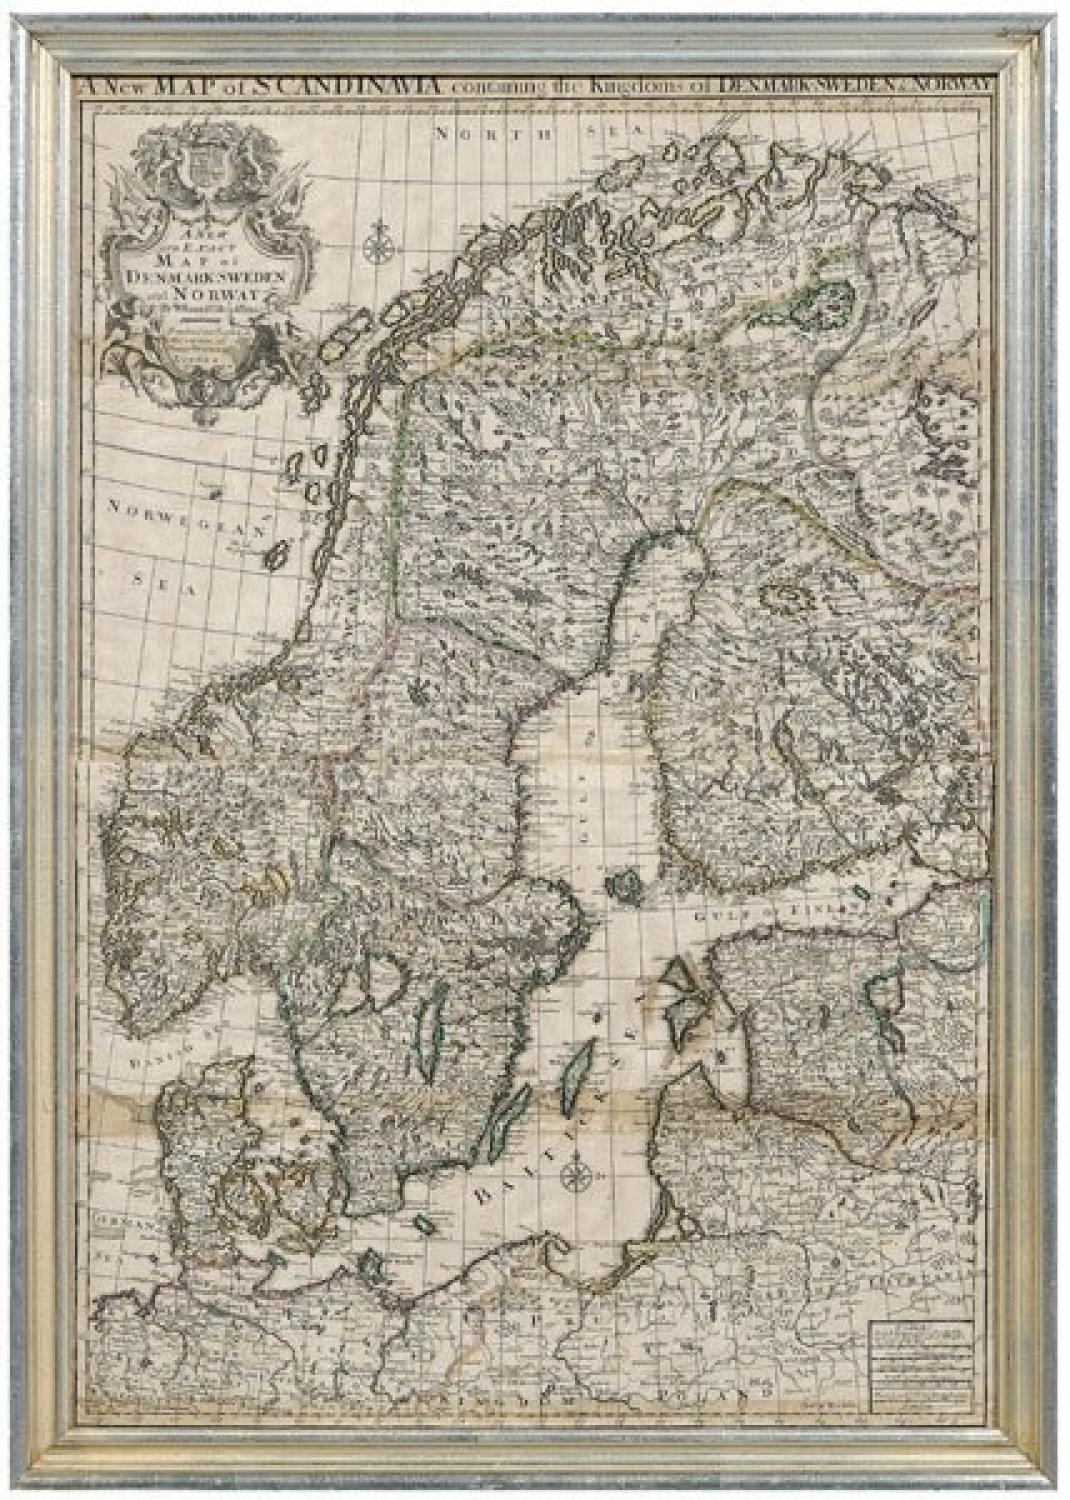 SOLD A New Map of Scandinavia